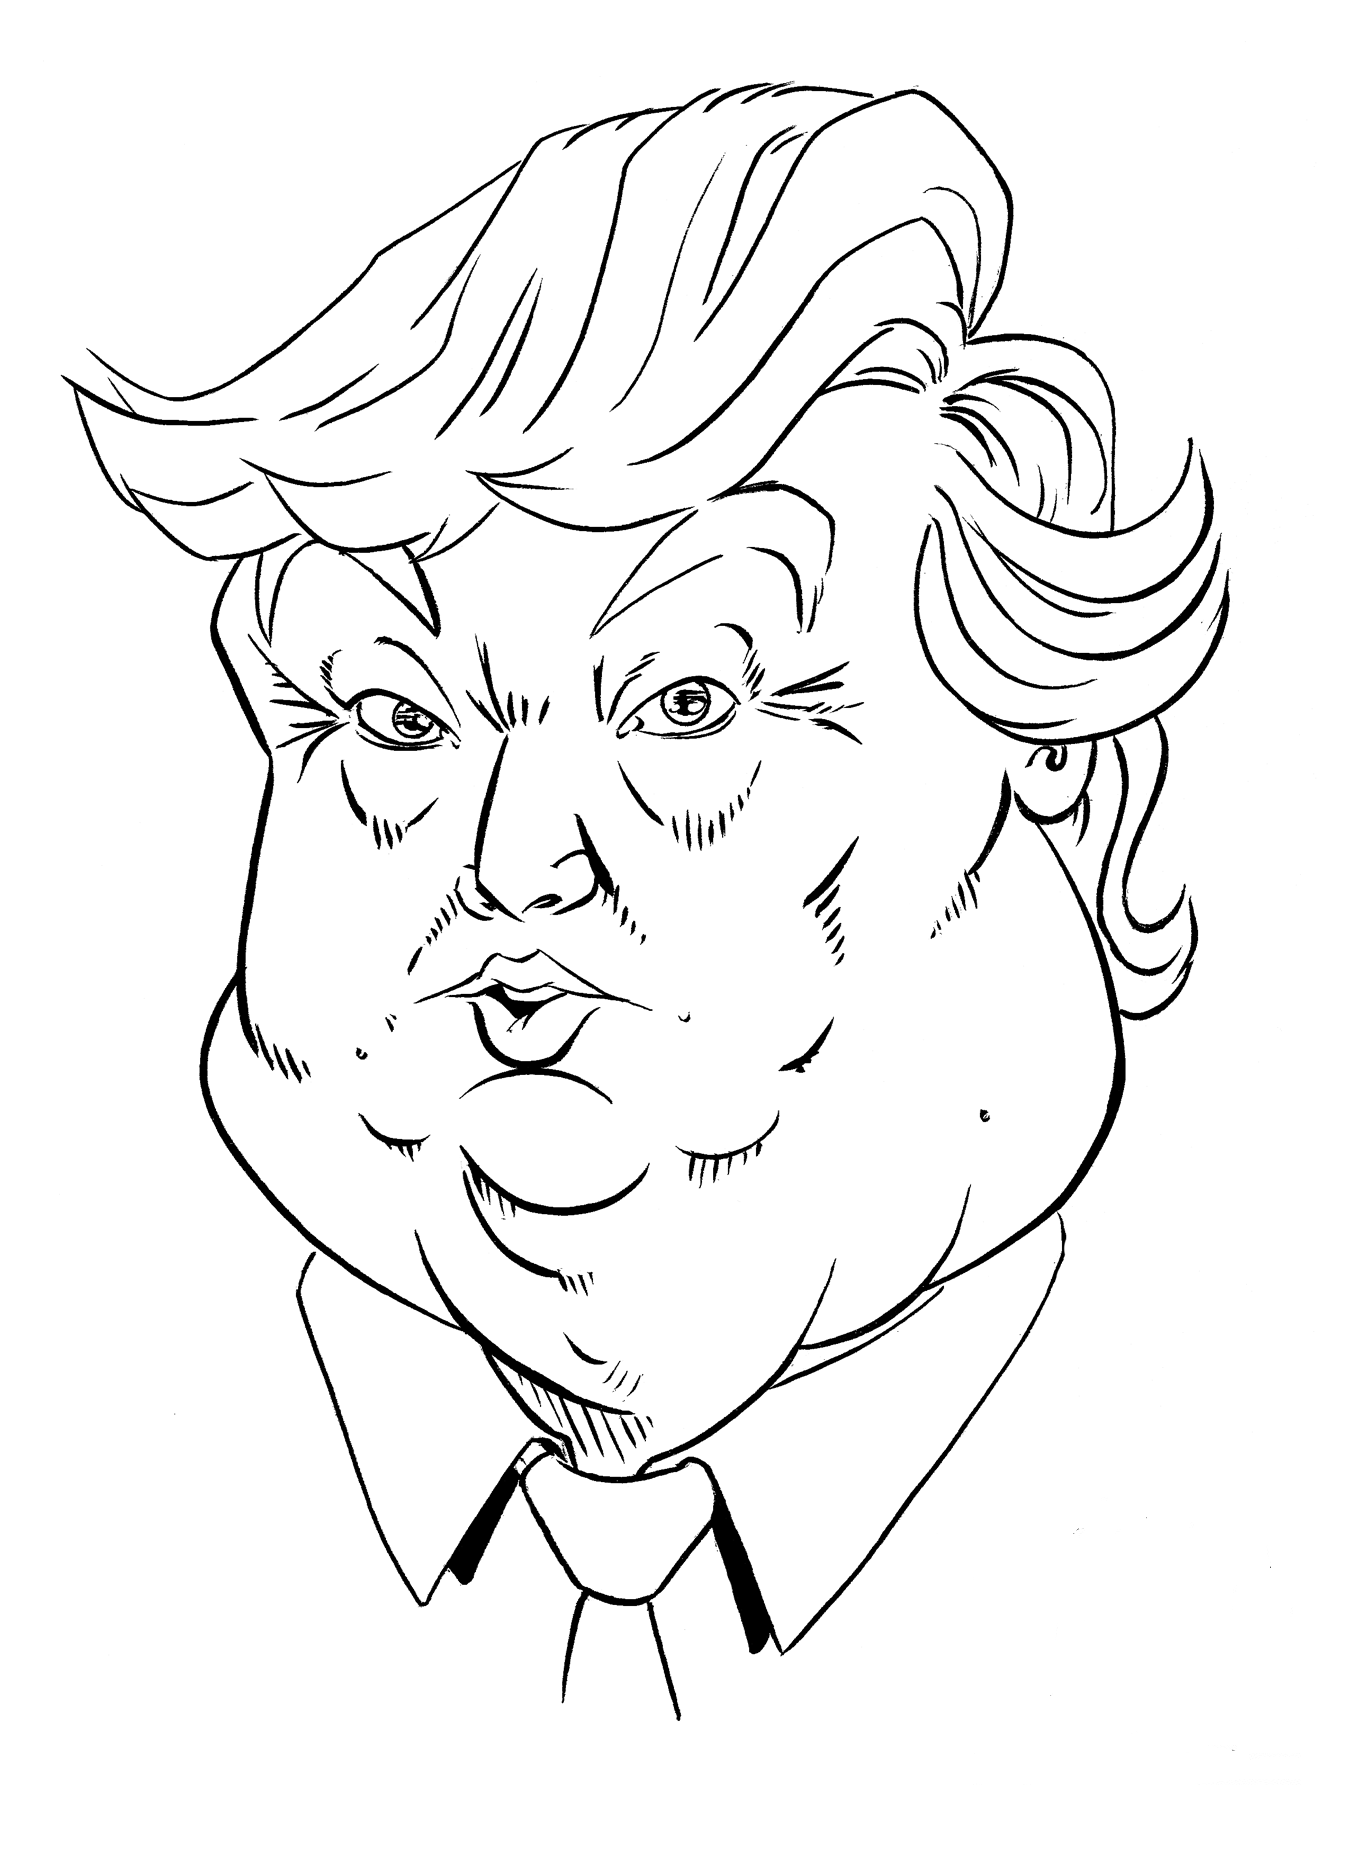 Donald Trump's Fat Face